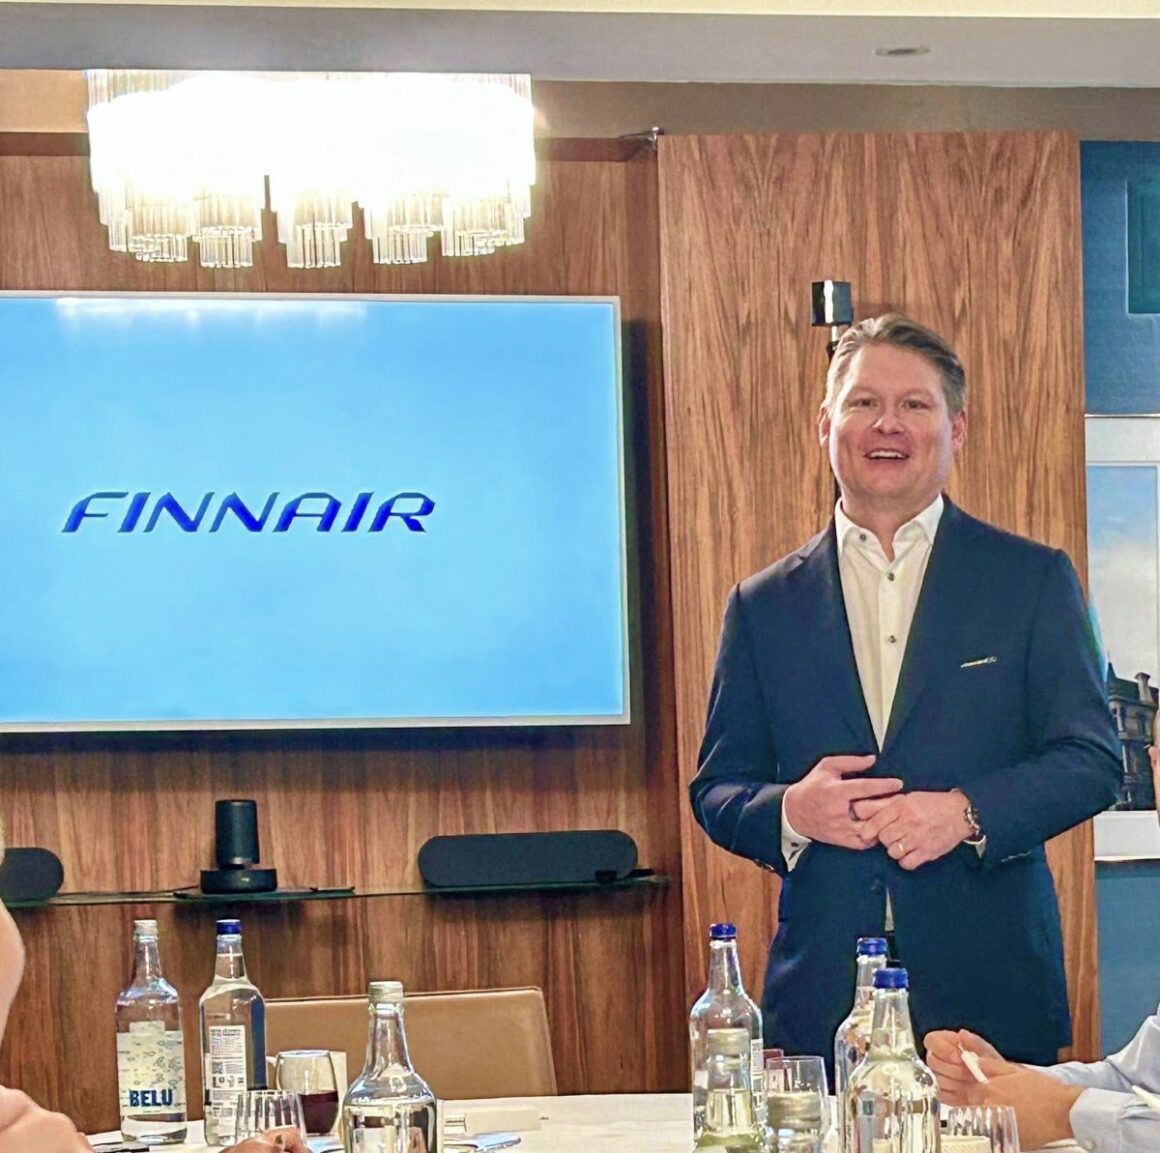 Finnair's CEO Topi Manner